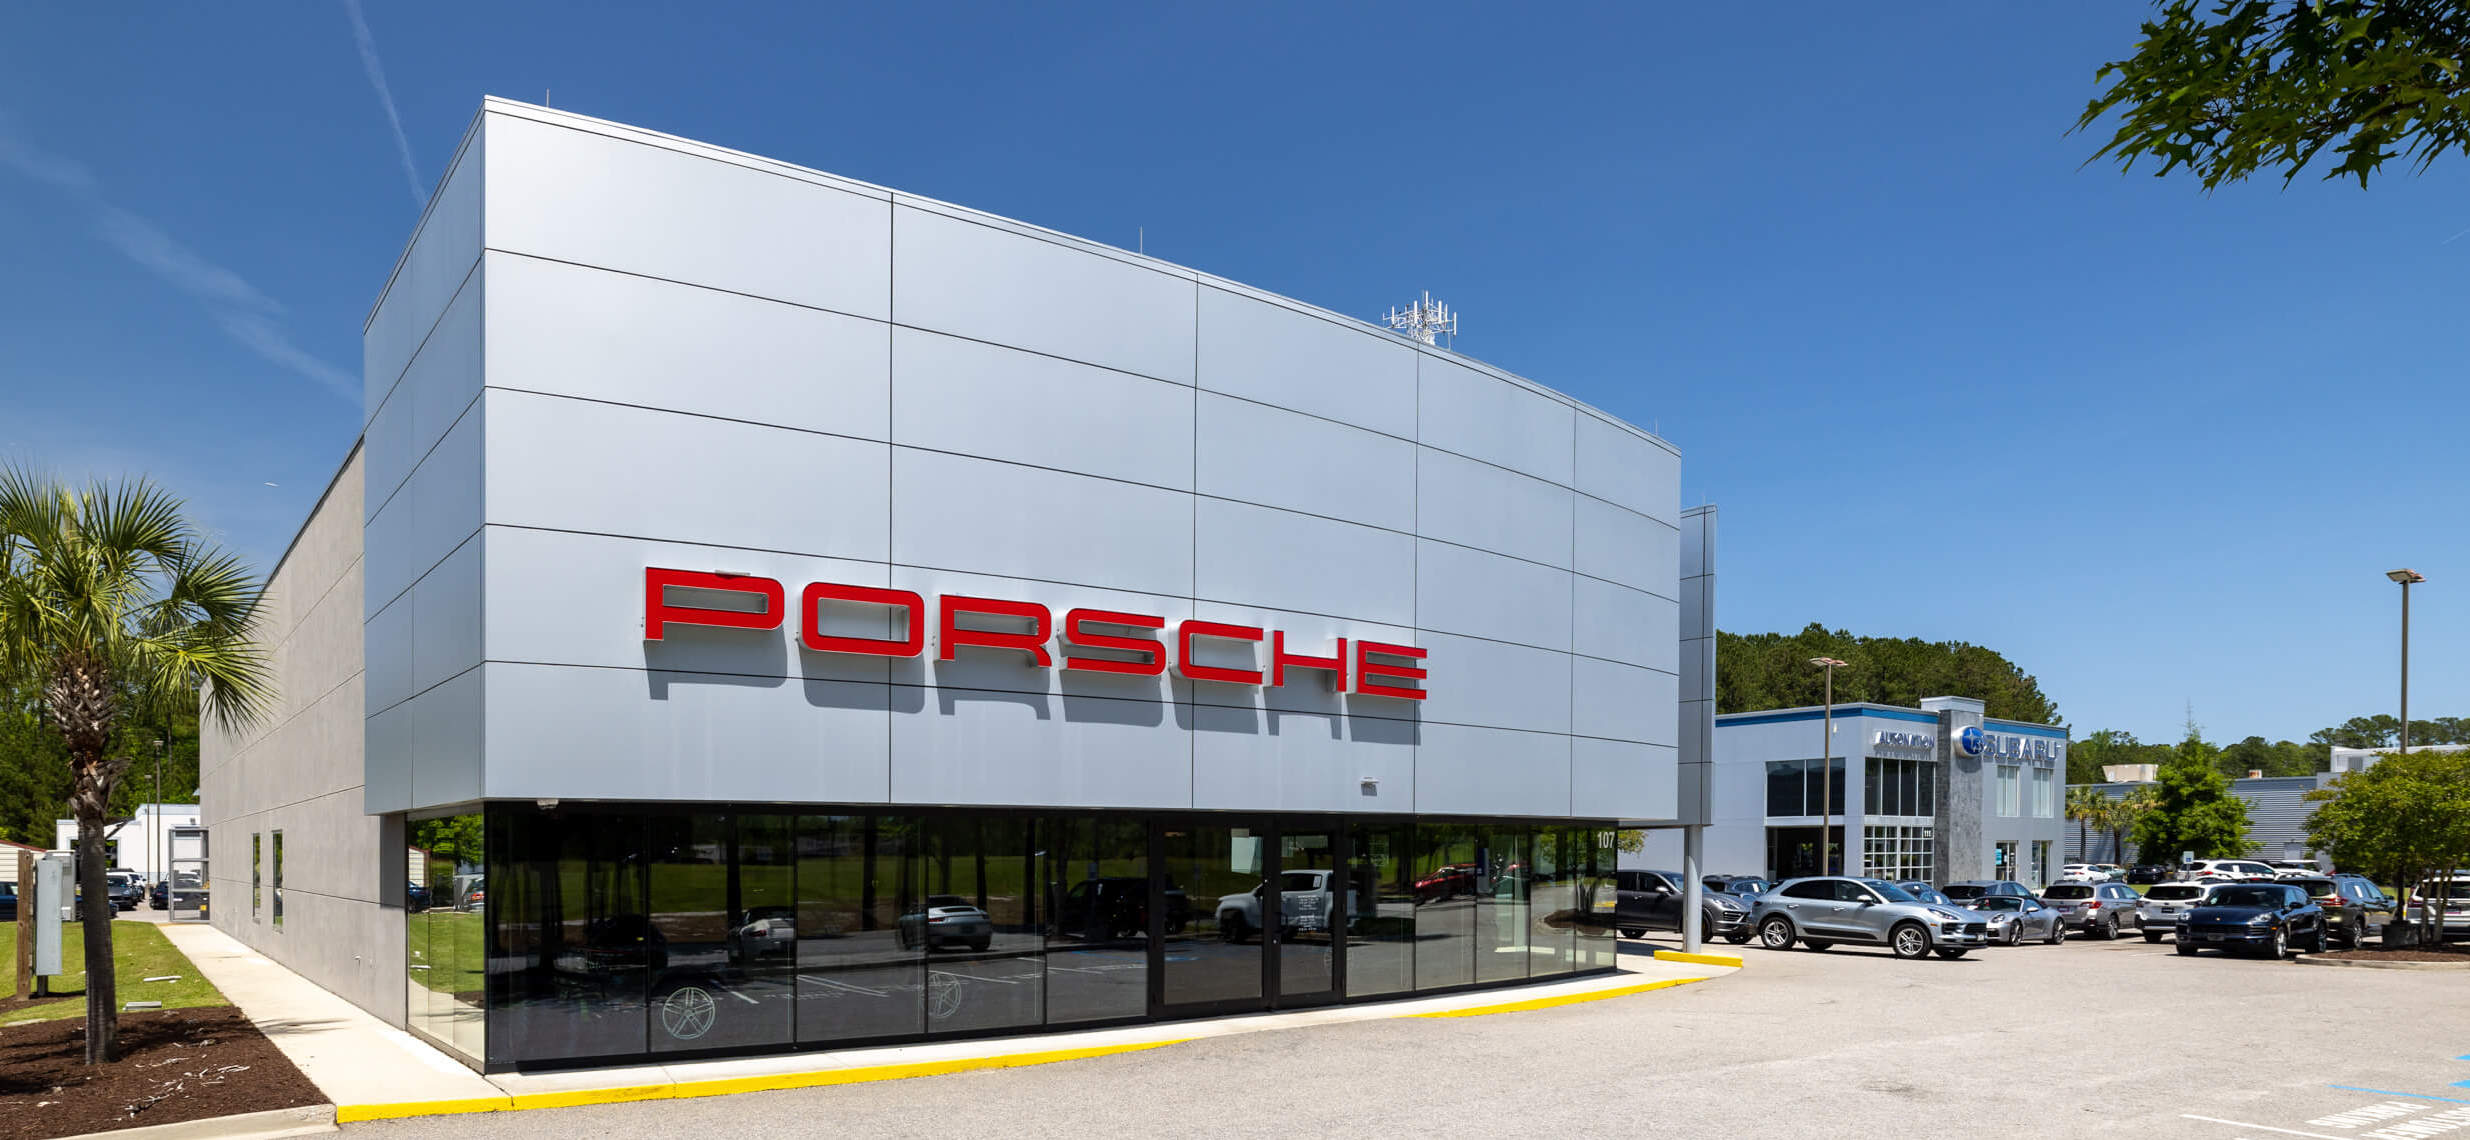 Exterior shot of Porsche dealership in Hilton Head, South Carolina